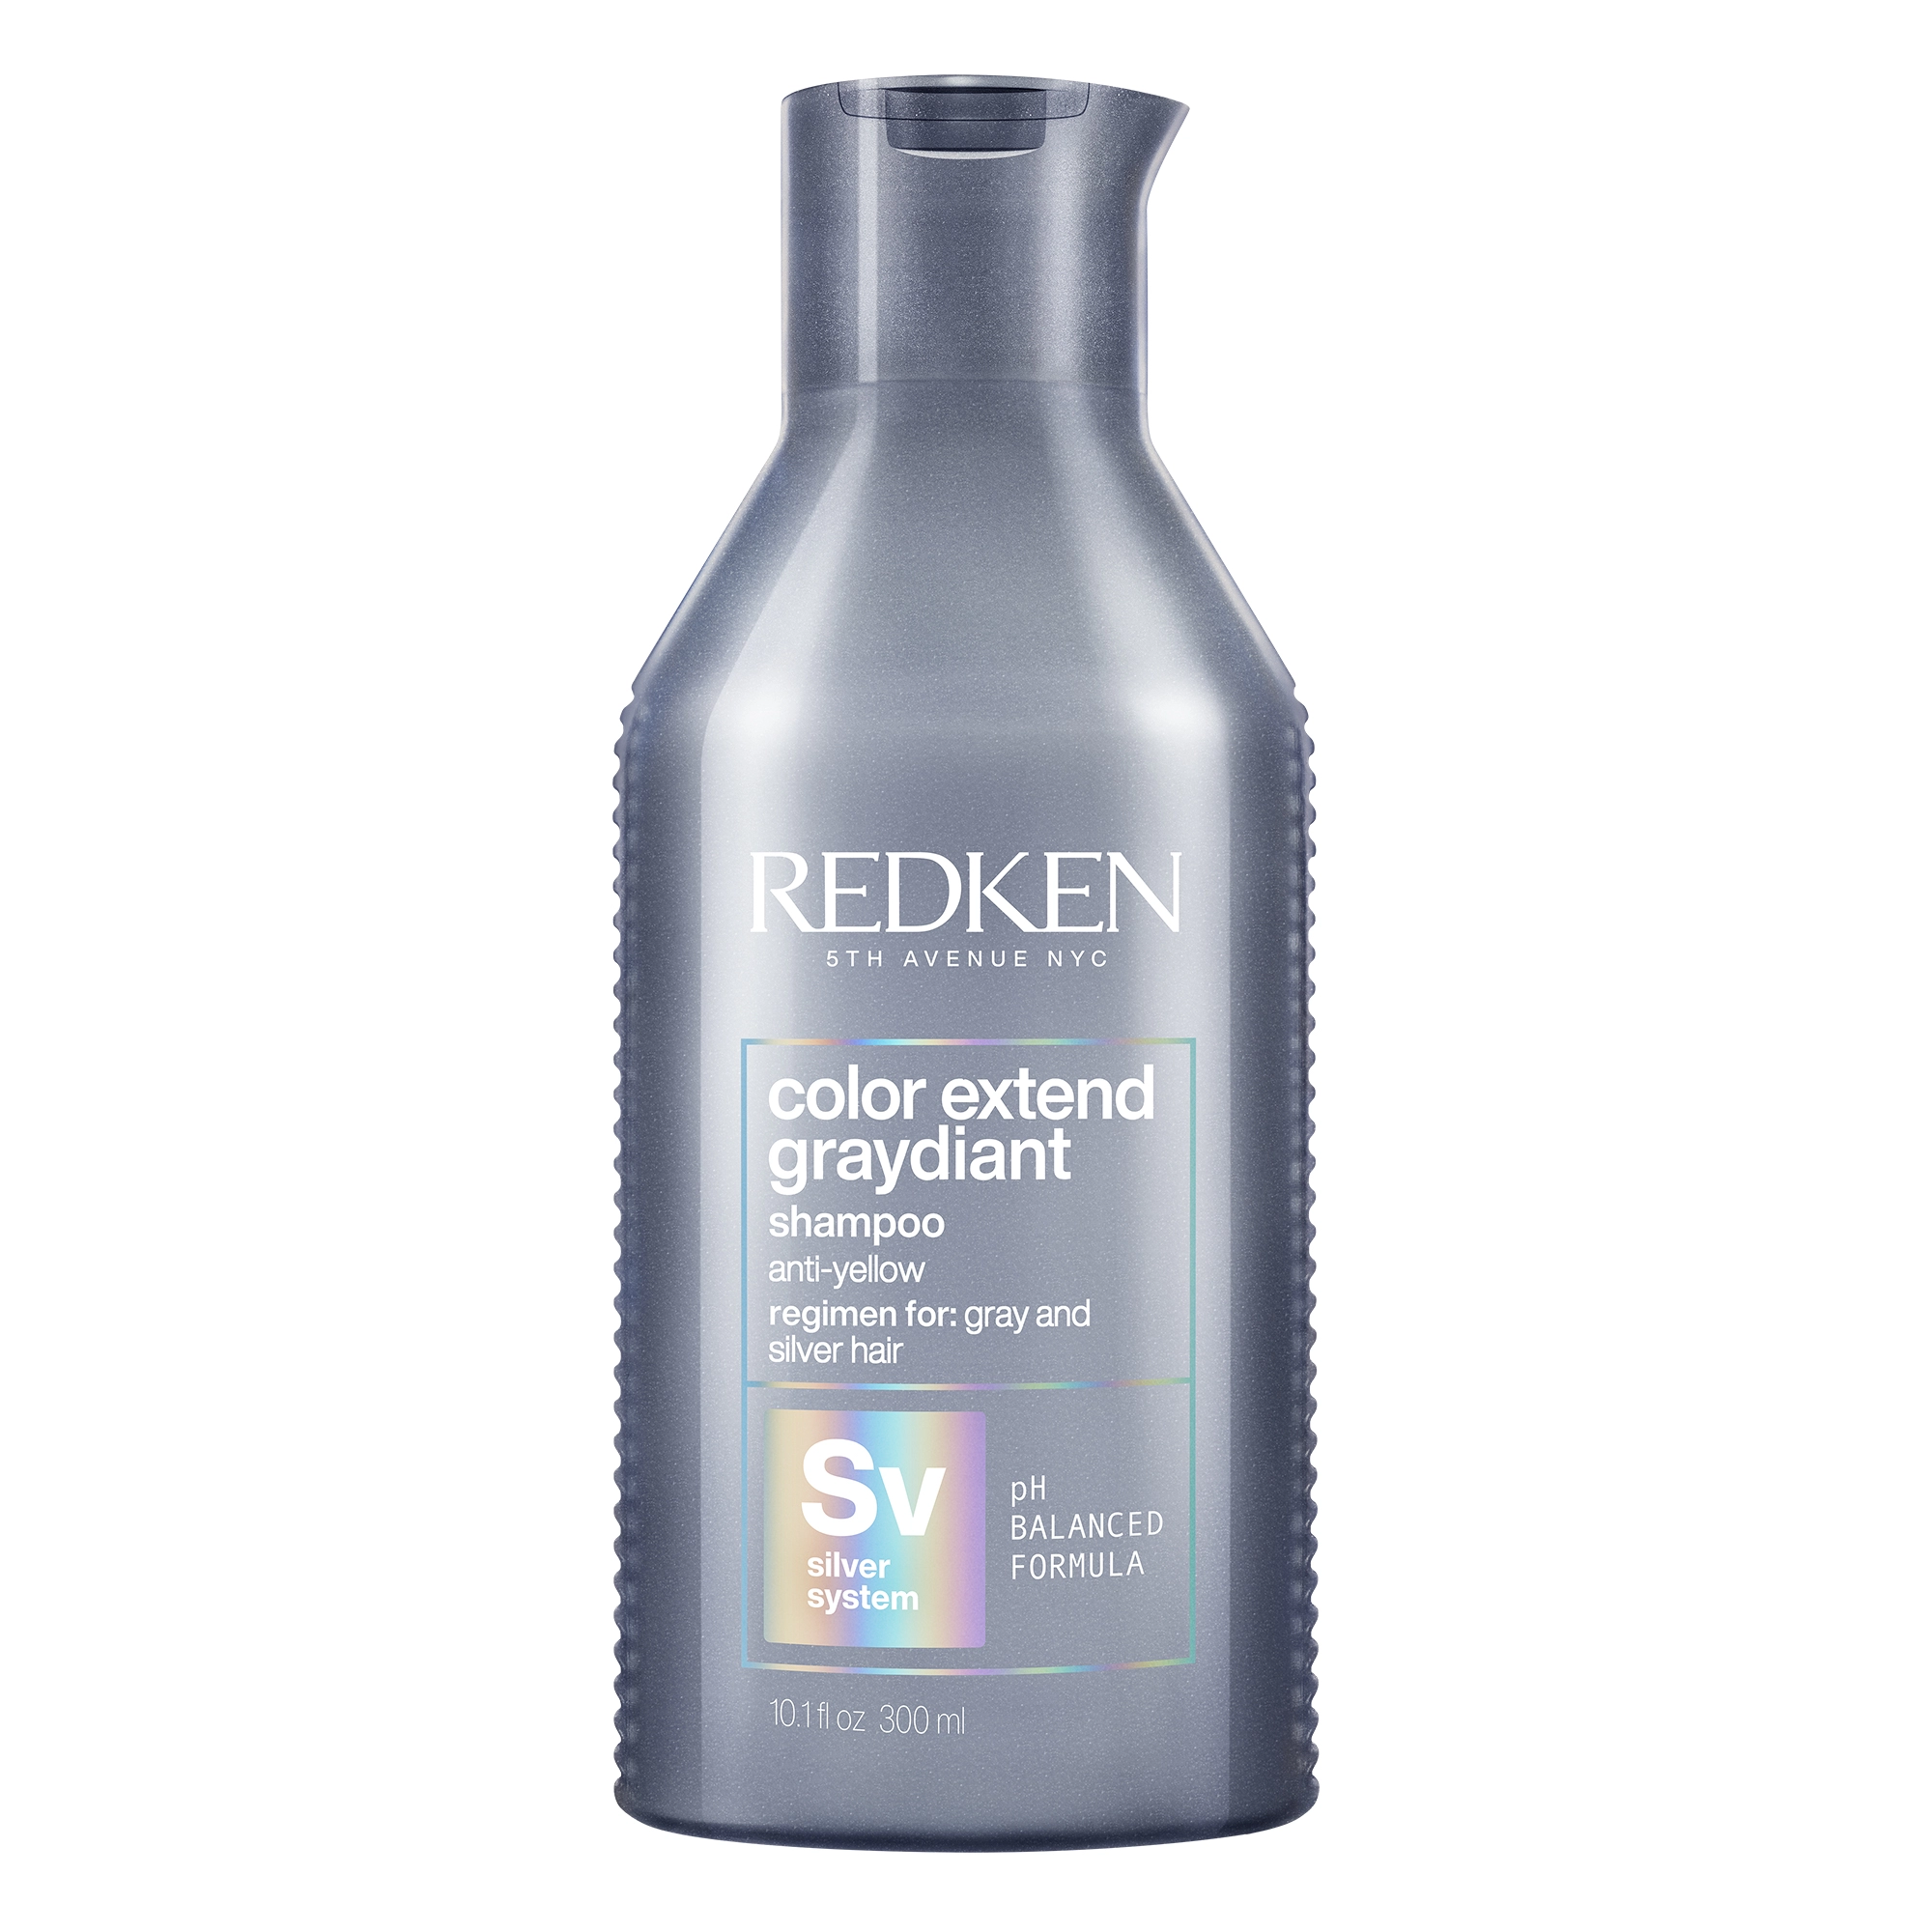 Redken 2020 Color Extend Graydiant Shampoo Product Shot 2000x2000 1 jpg